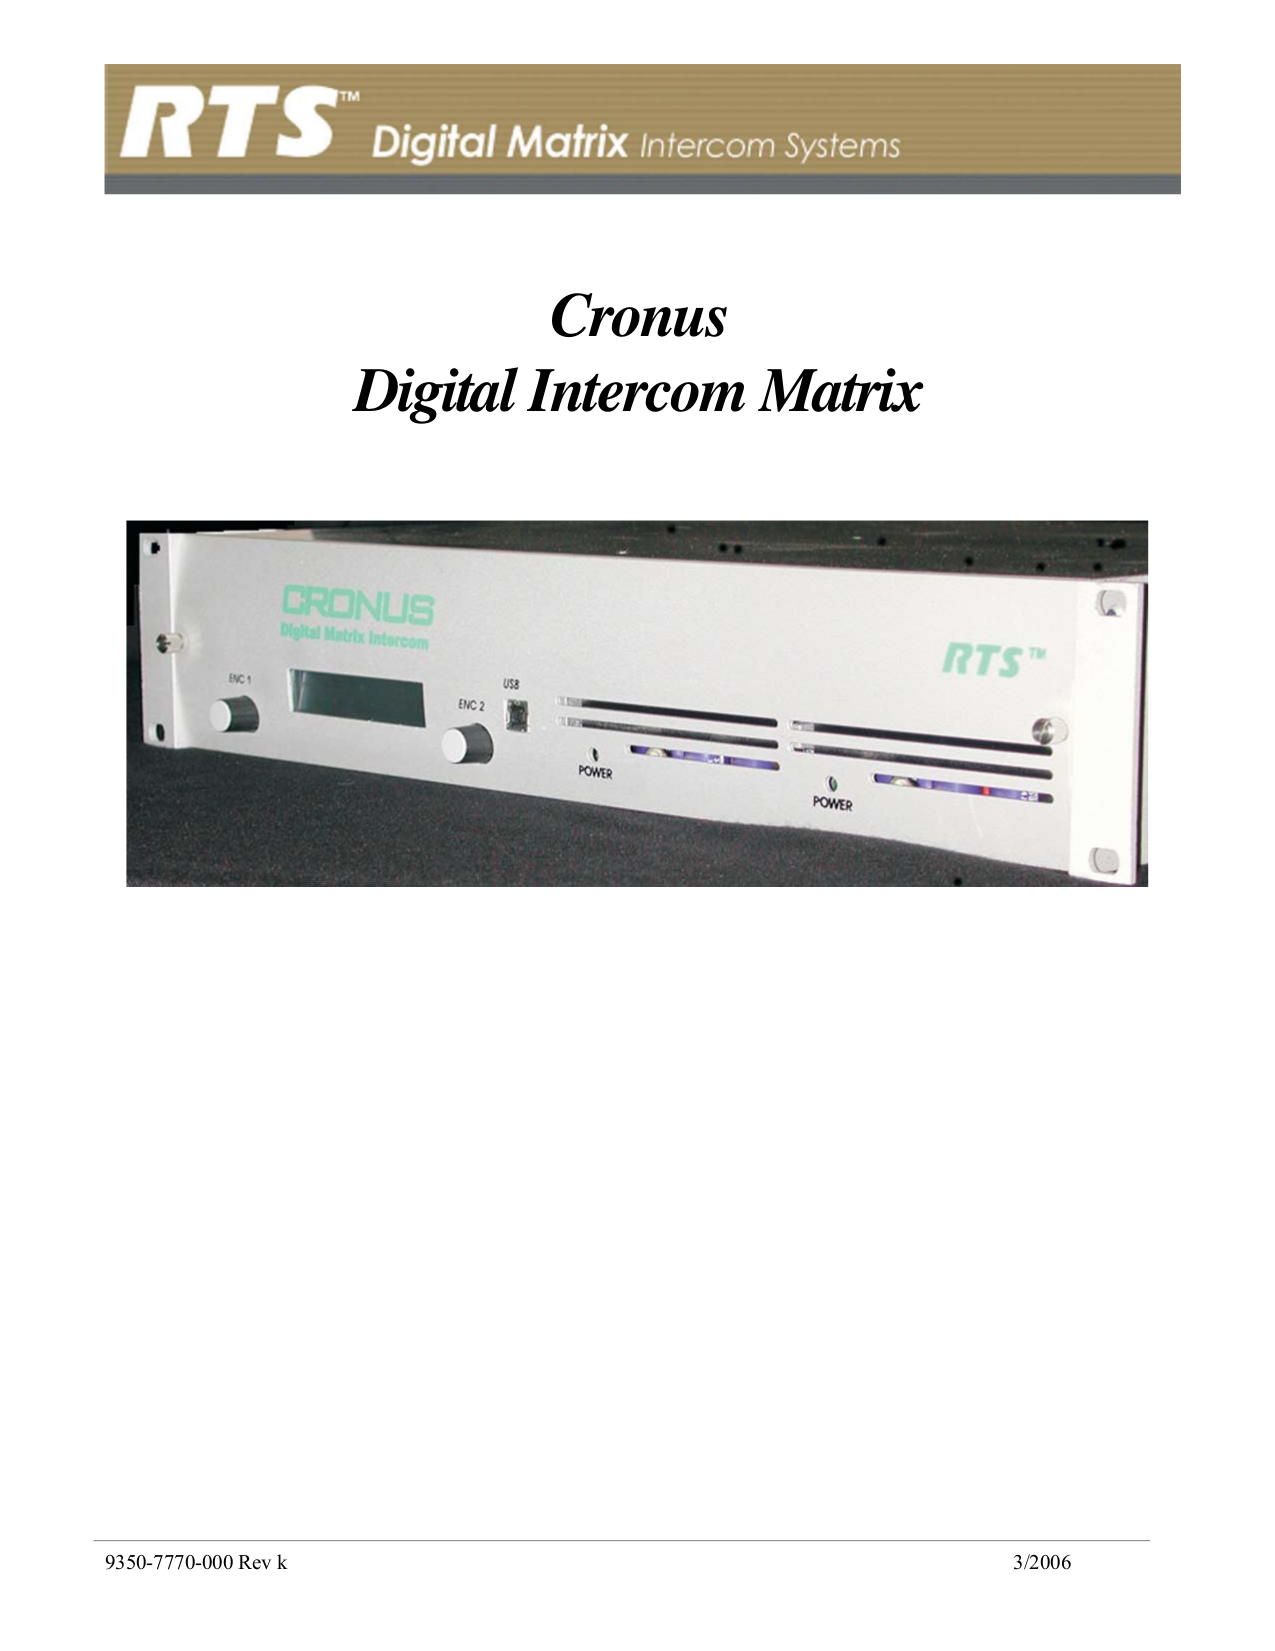 pdf for Telex Other XCP-32-DB9 IntercomSystem manual